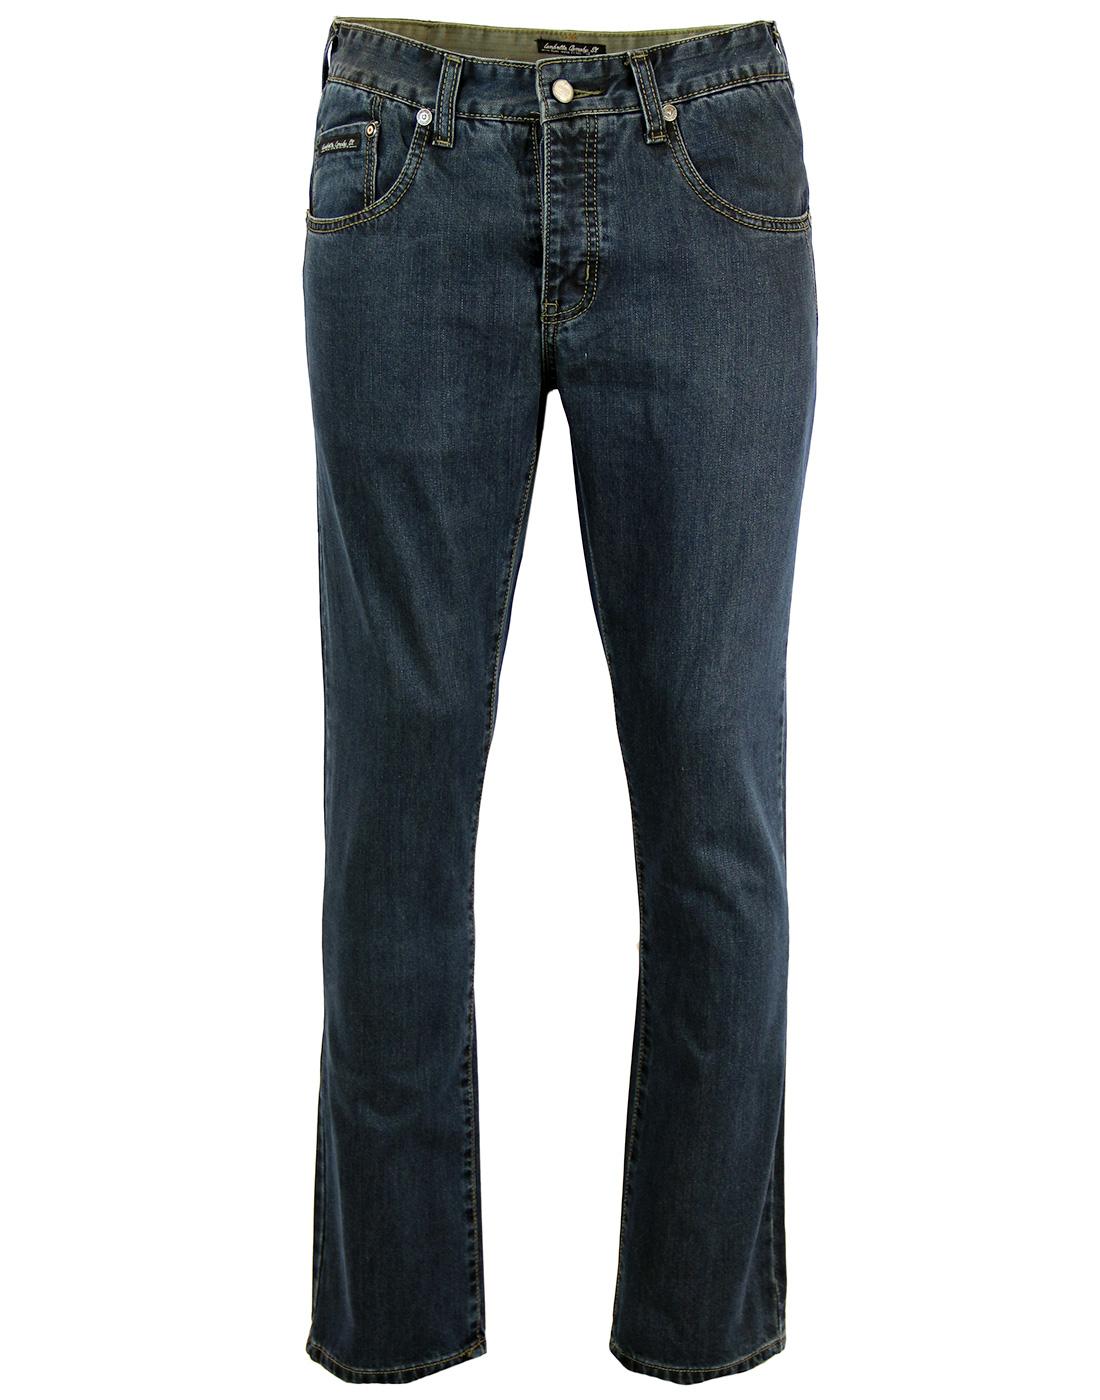 LAMBRETTA Mens Retro Indie Target Pocket Jeans in Overdye